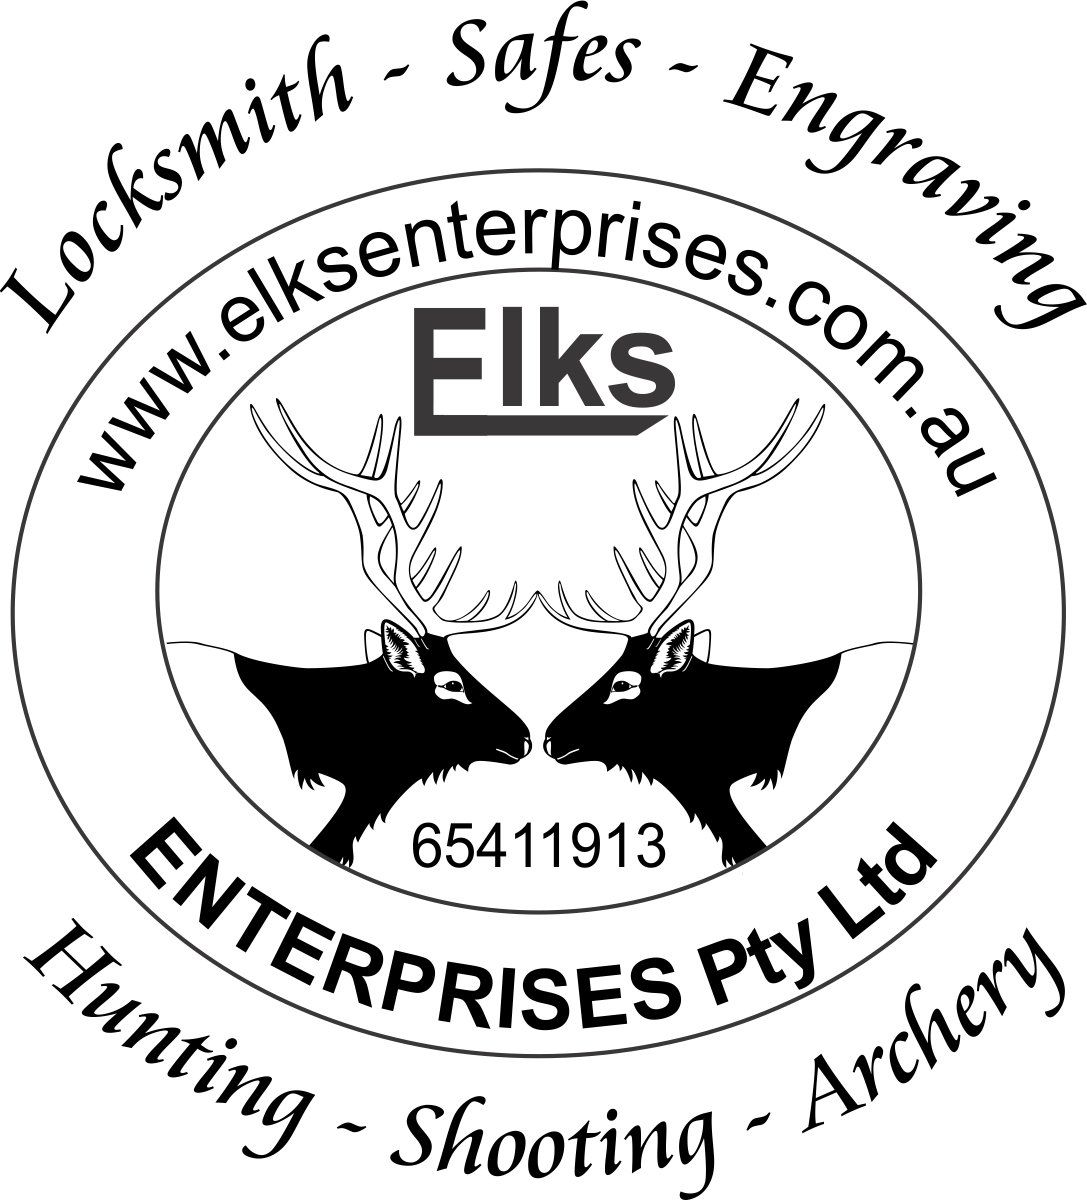 Muswellbrook’s Elks Enterprises  - logo